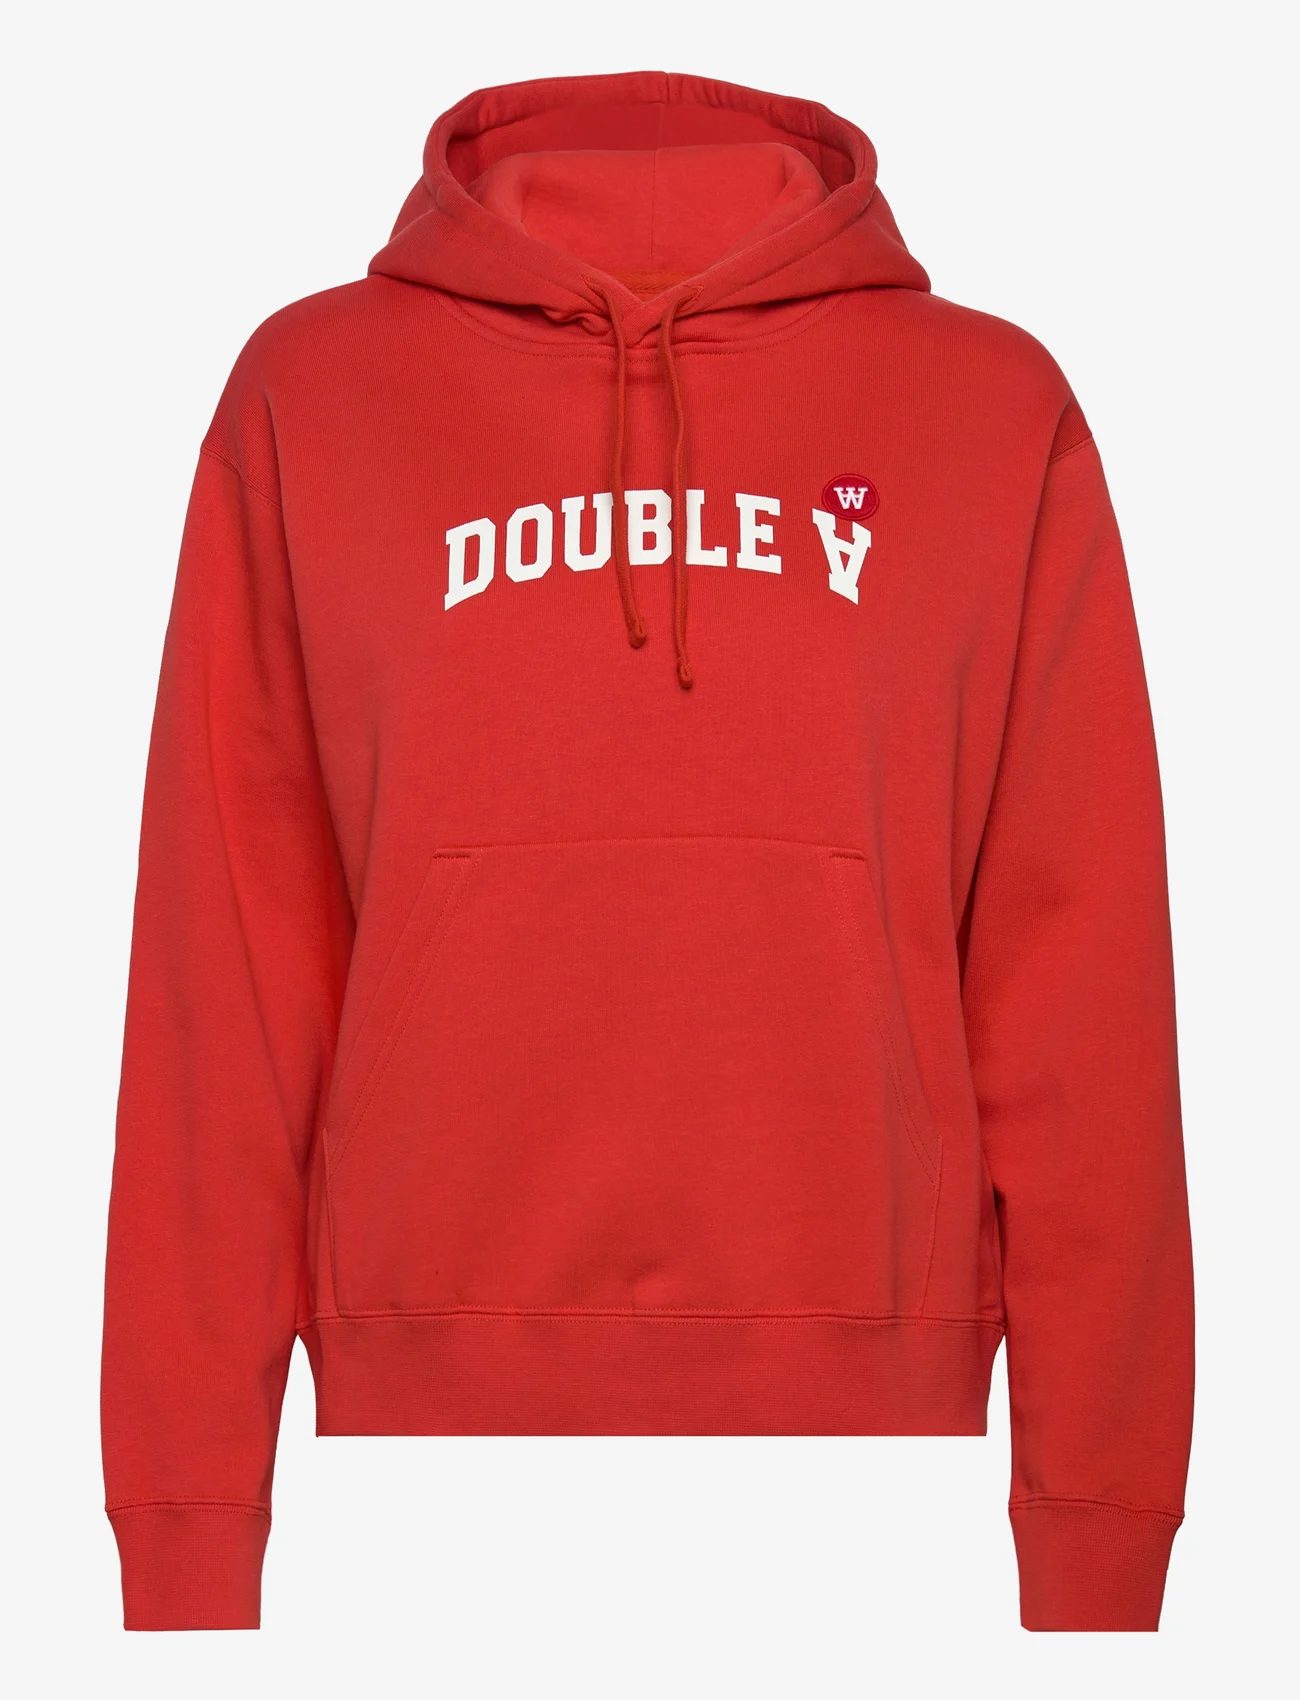 Double A by Wood Wood - Jenn arch hoodie - sweatshirts & hoodies - chili red - 0